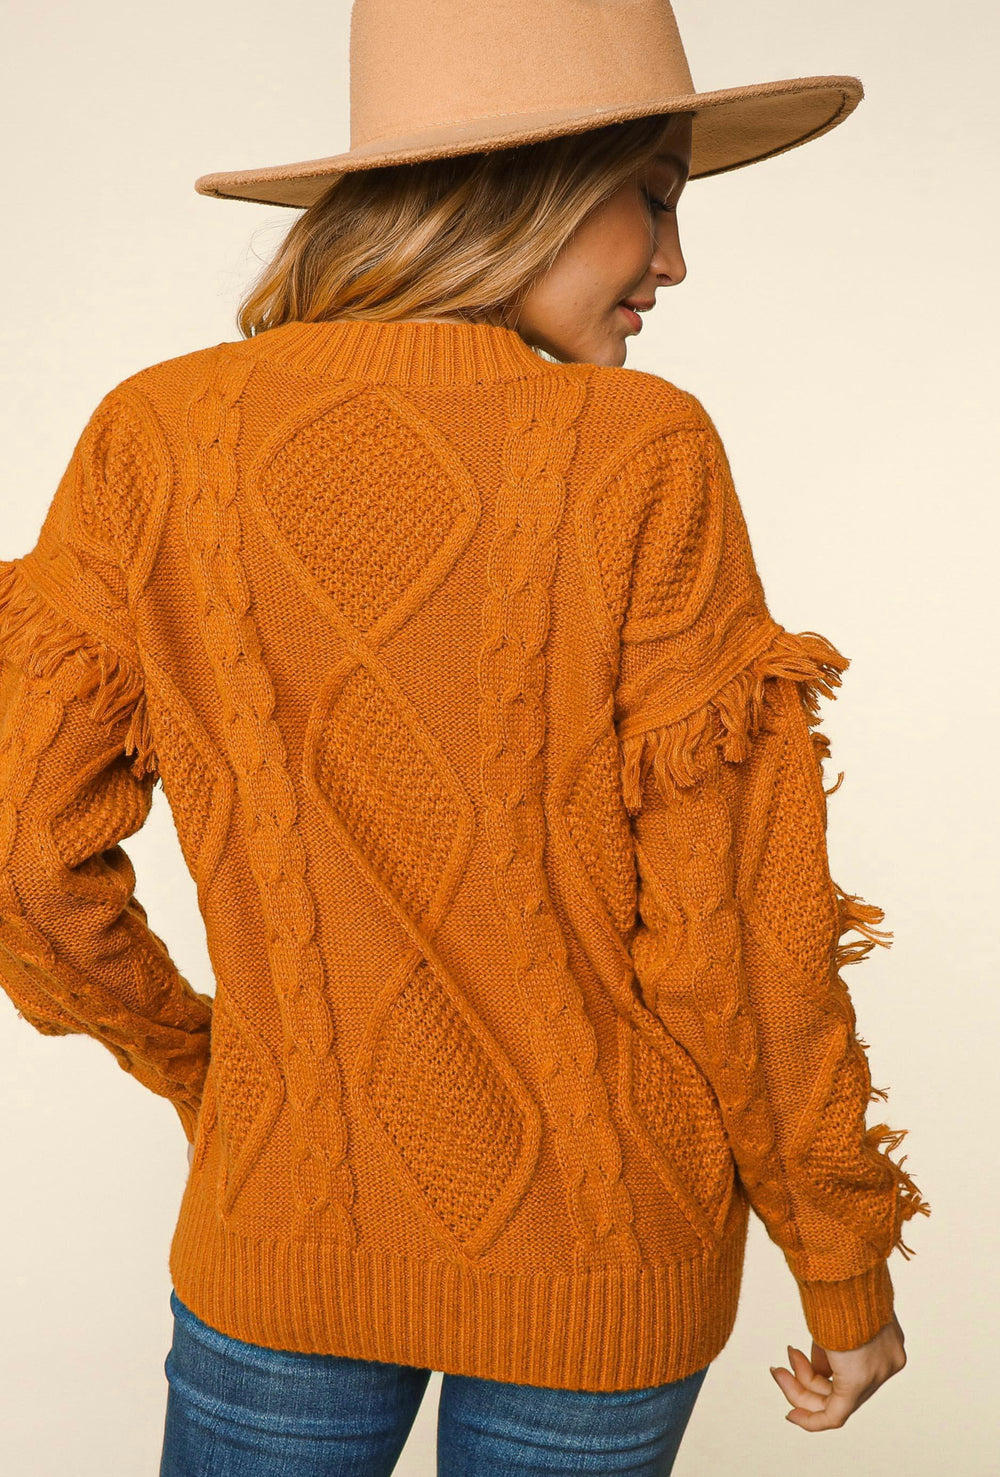 Dani Oversized Fringe Tassel Sweatshirt, Rust-Sweaters/Sweatshirts-Inspired by Justeen-Women's Clothing Boutique in Chicago, Illinois